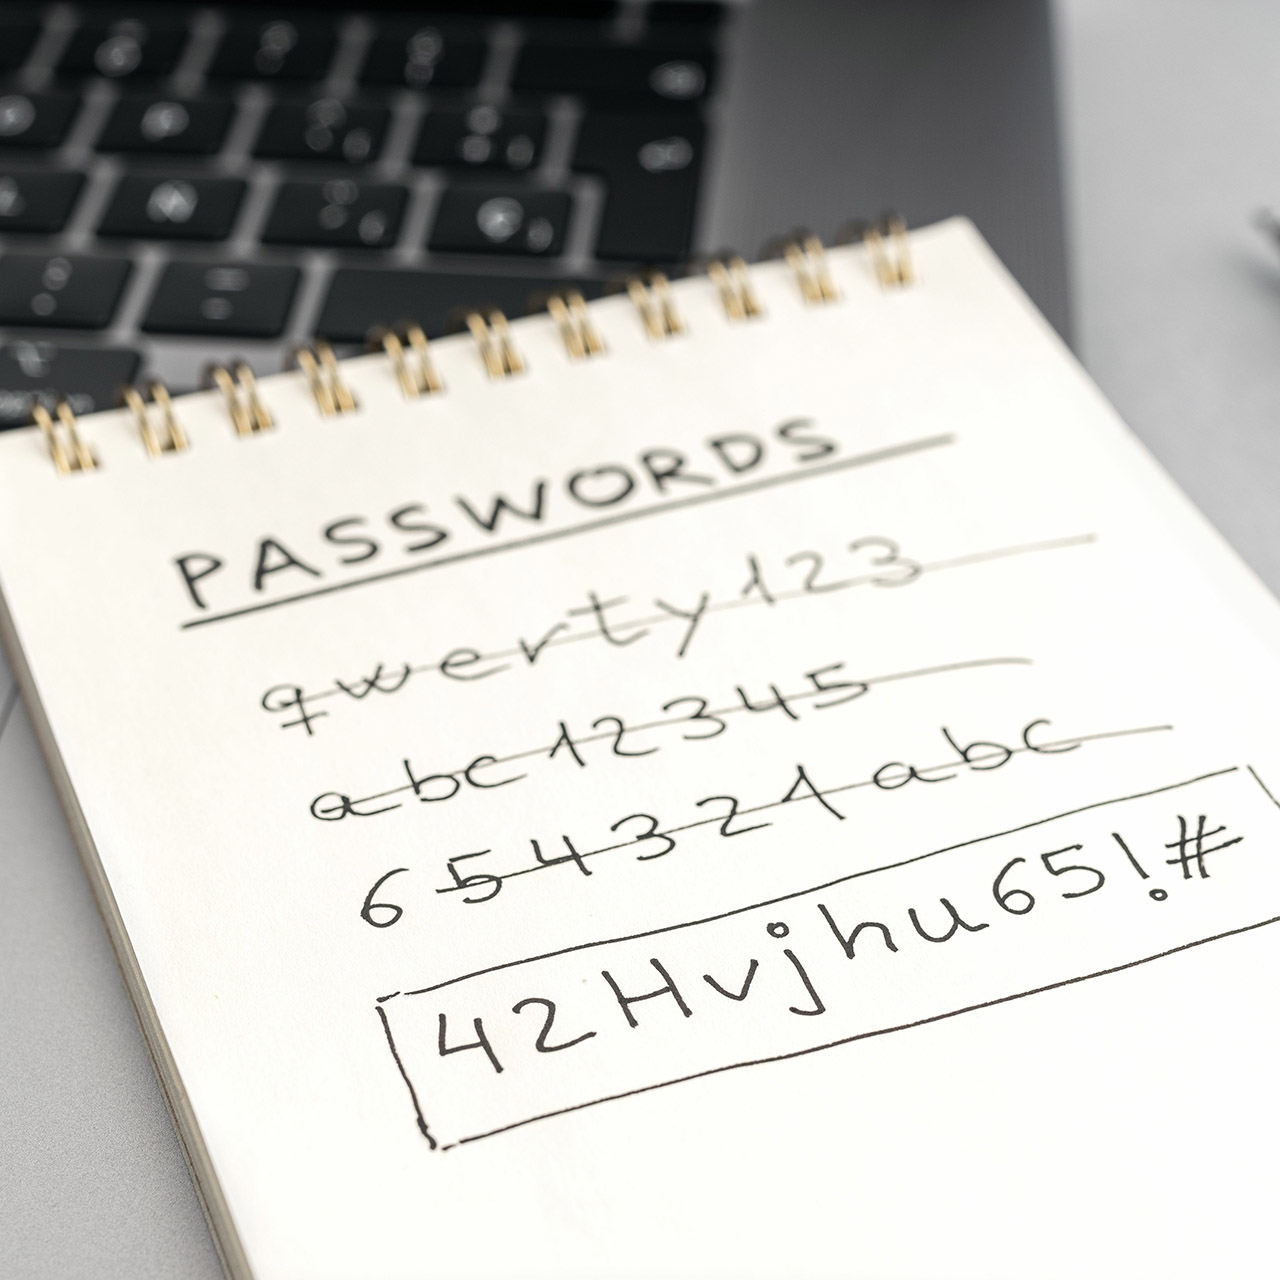 how to enforce long passwords in Windows